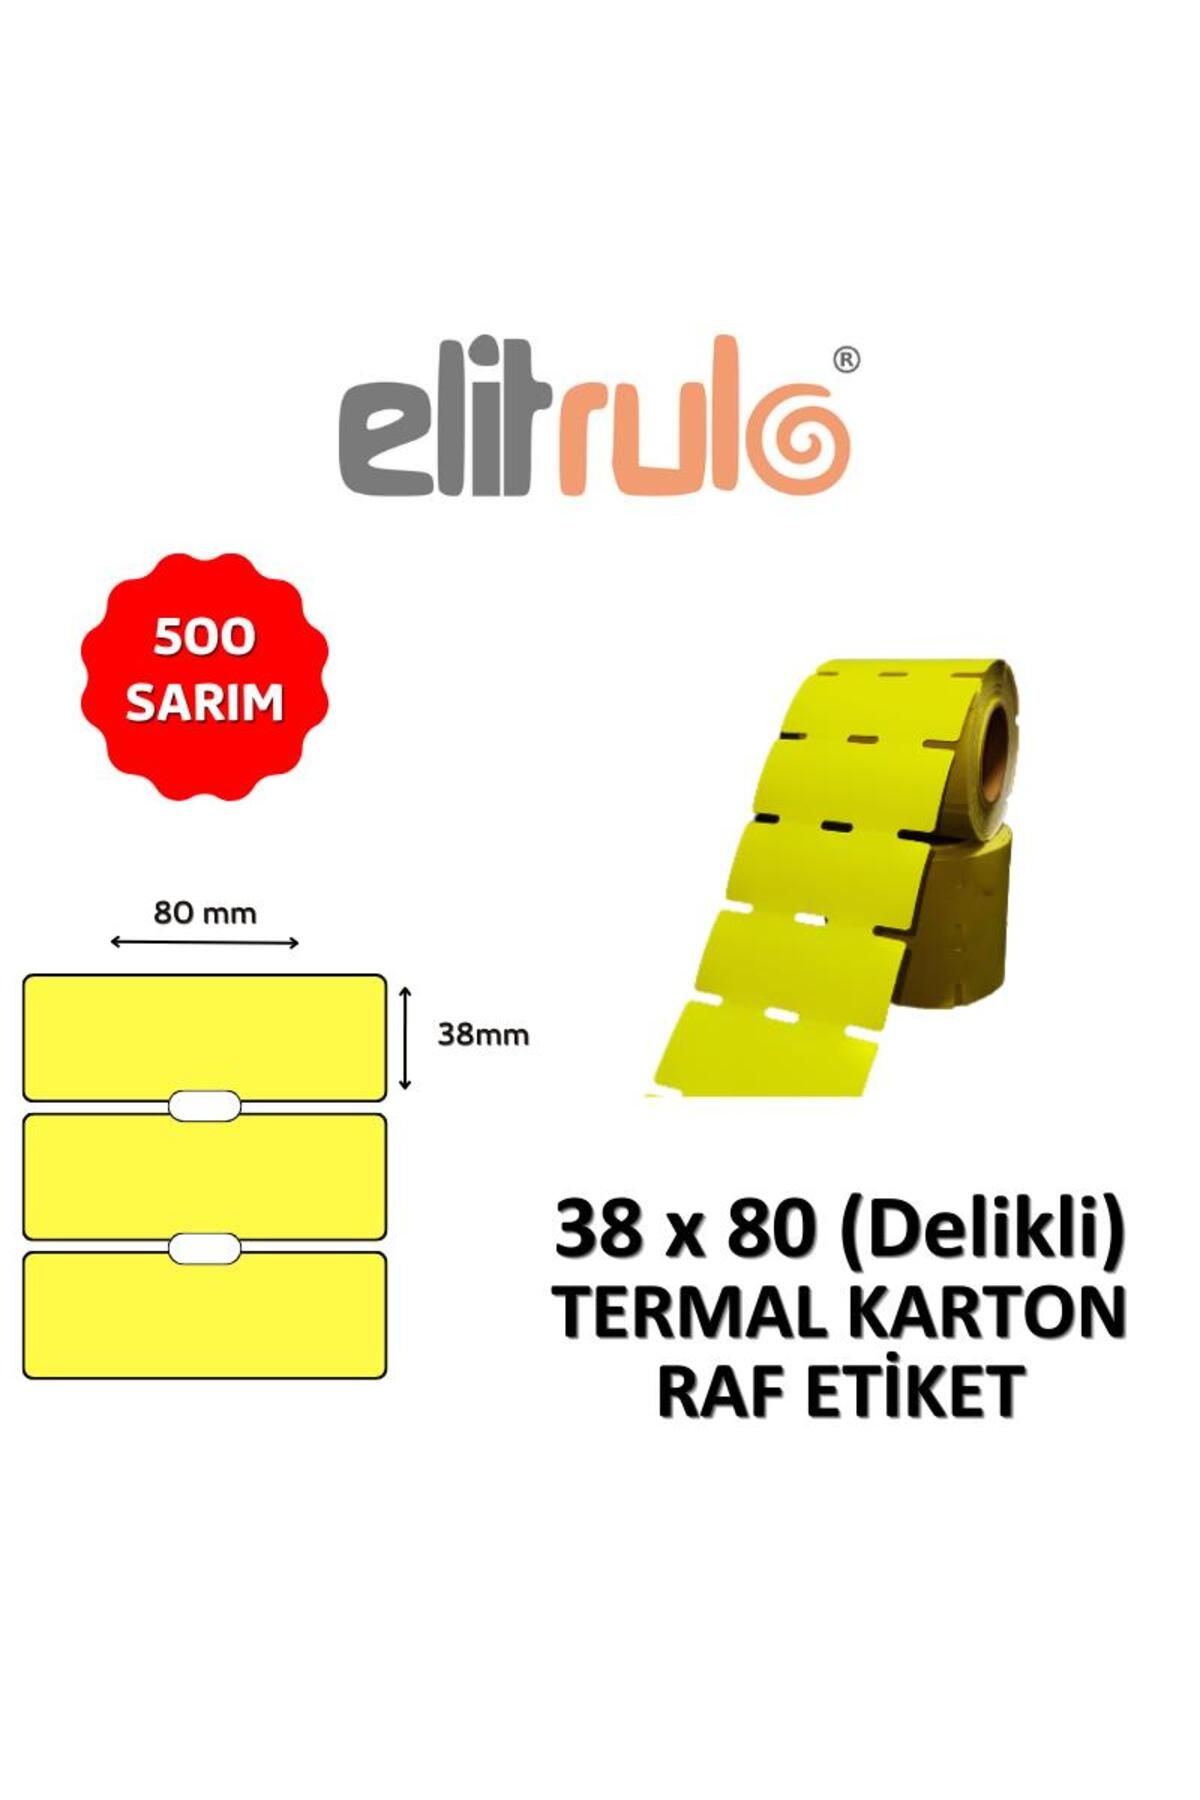 Elit Rulo Elitrulo Termal Karton Raf Etiketi 38mm x 80mm DELİKLİ SARI - 500 Adet